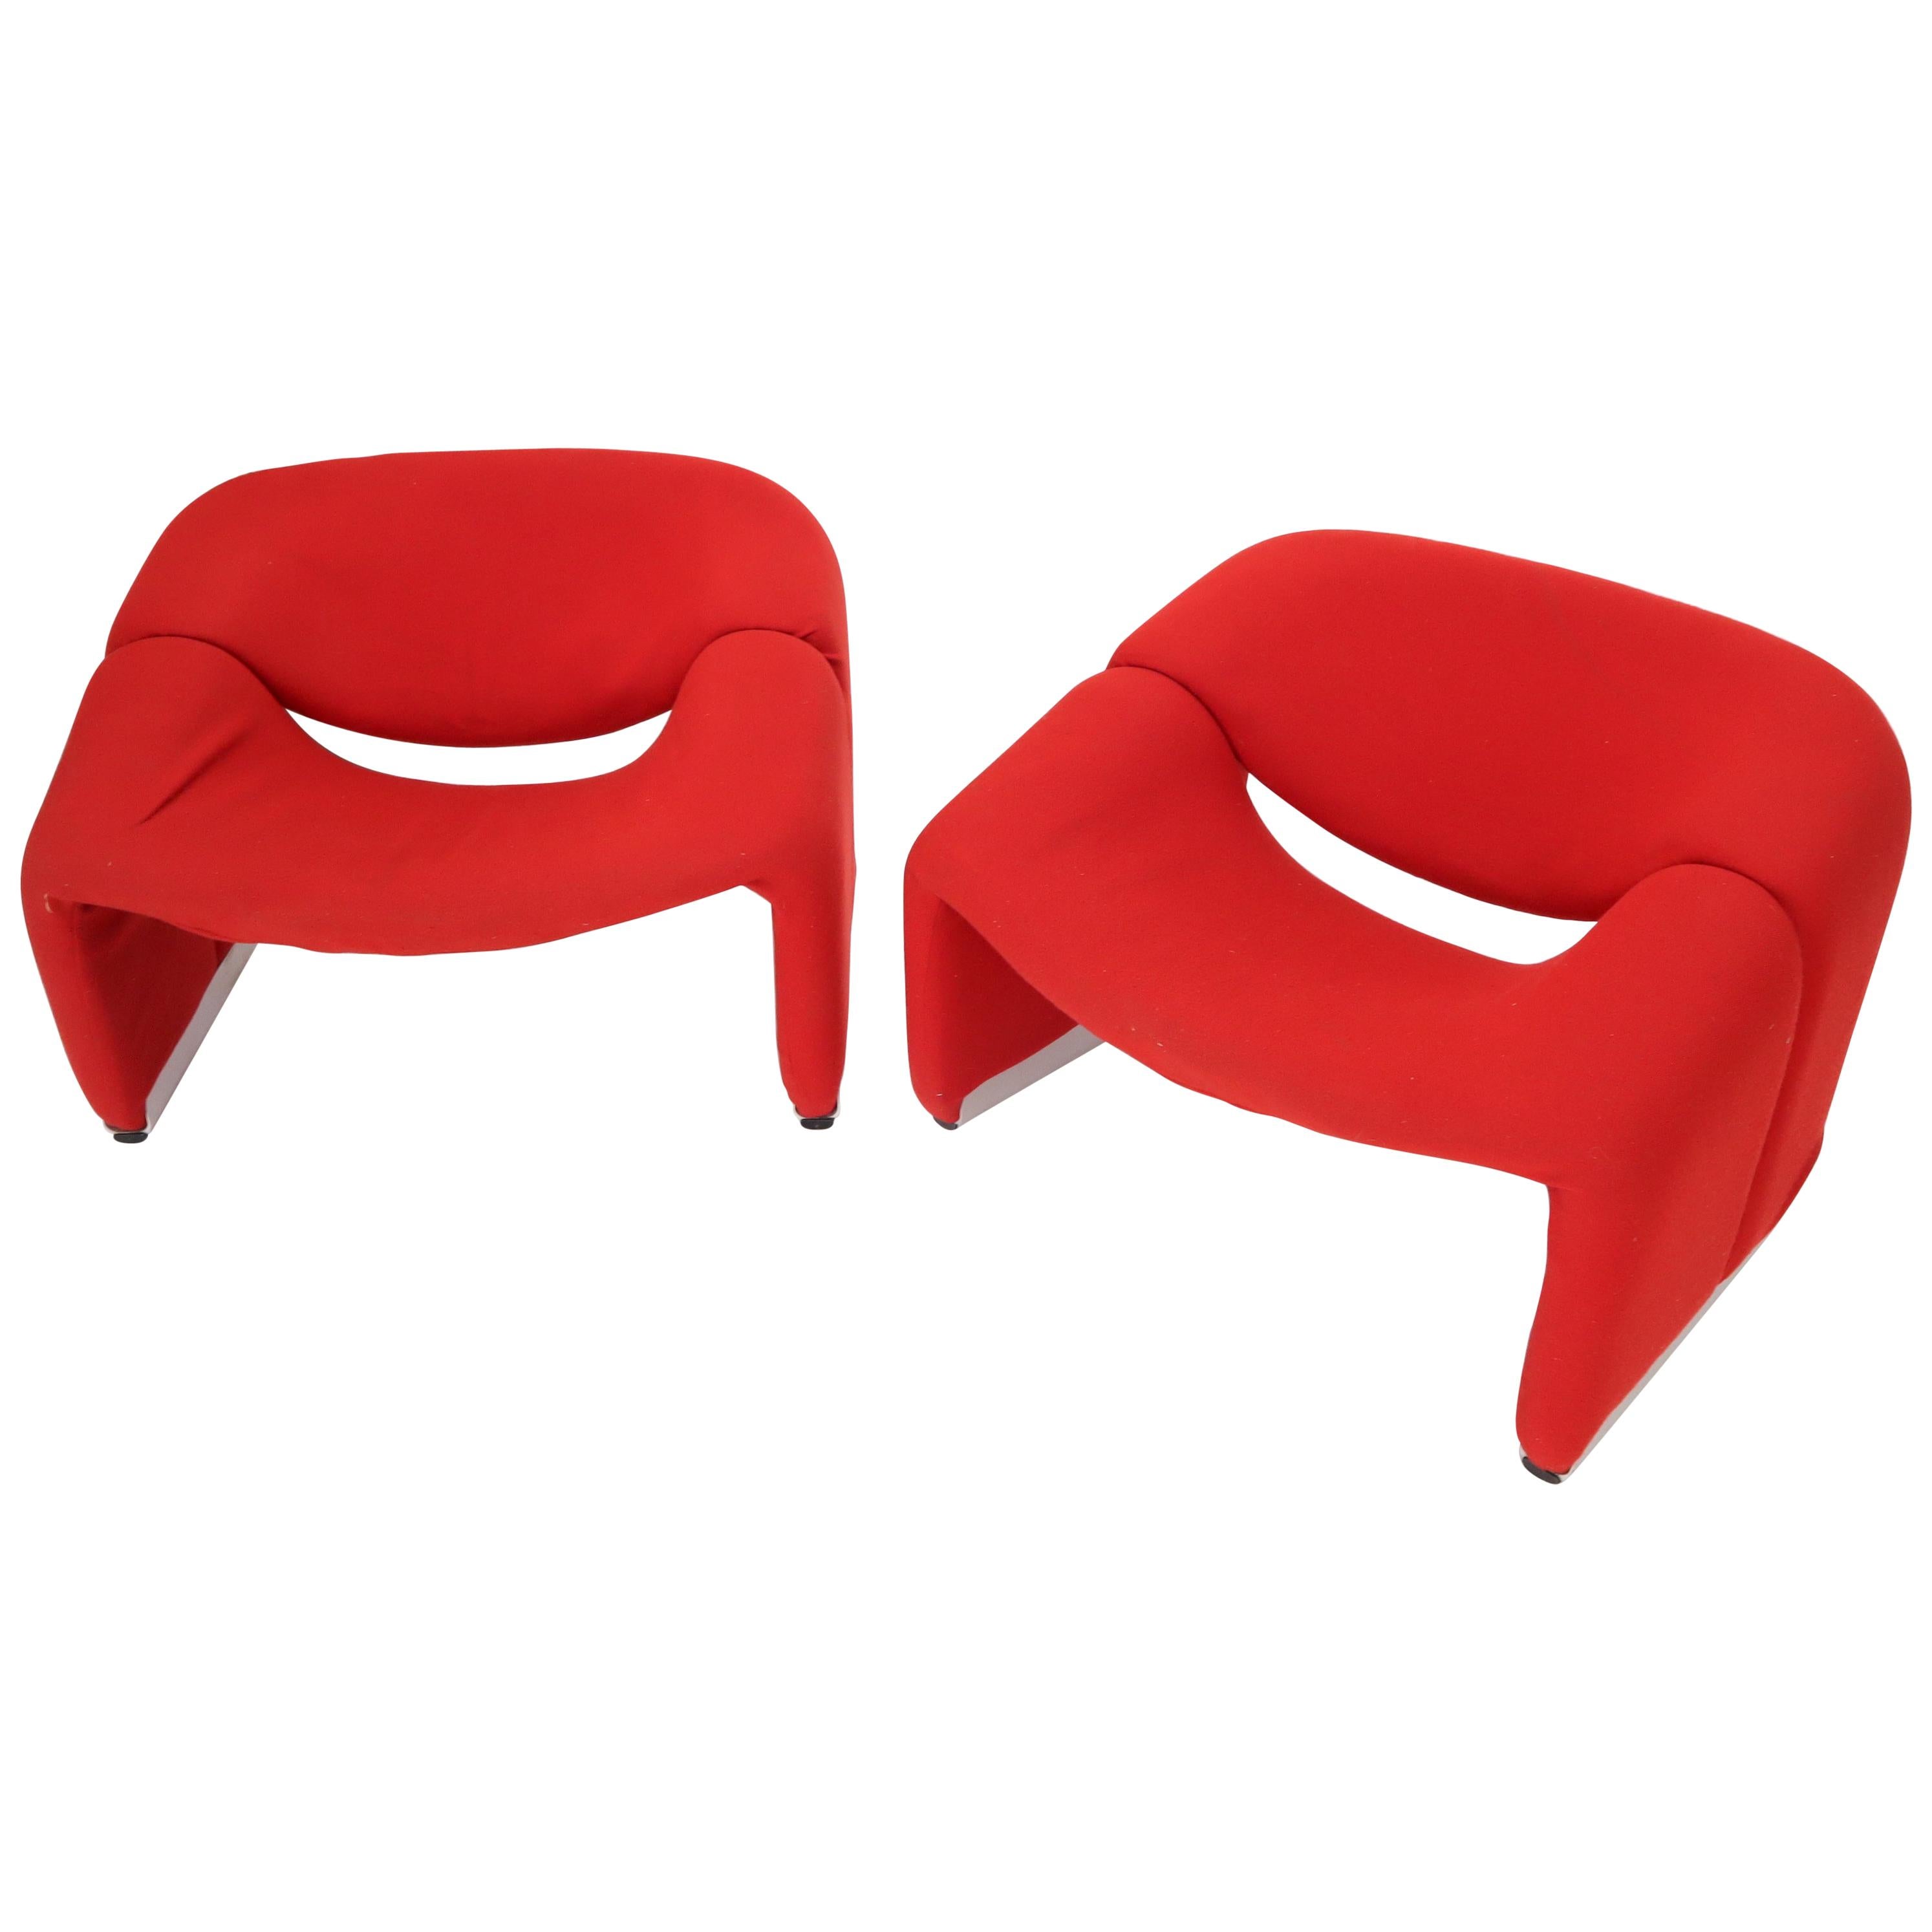 Pierre Paulin Artifort Pair of 'Groovy' Lounge Chairs in Red Wool Upholstery